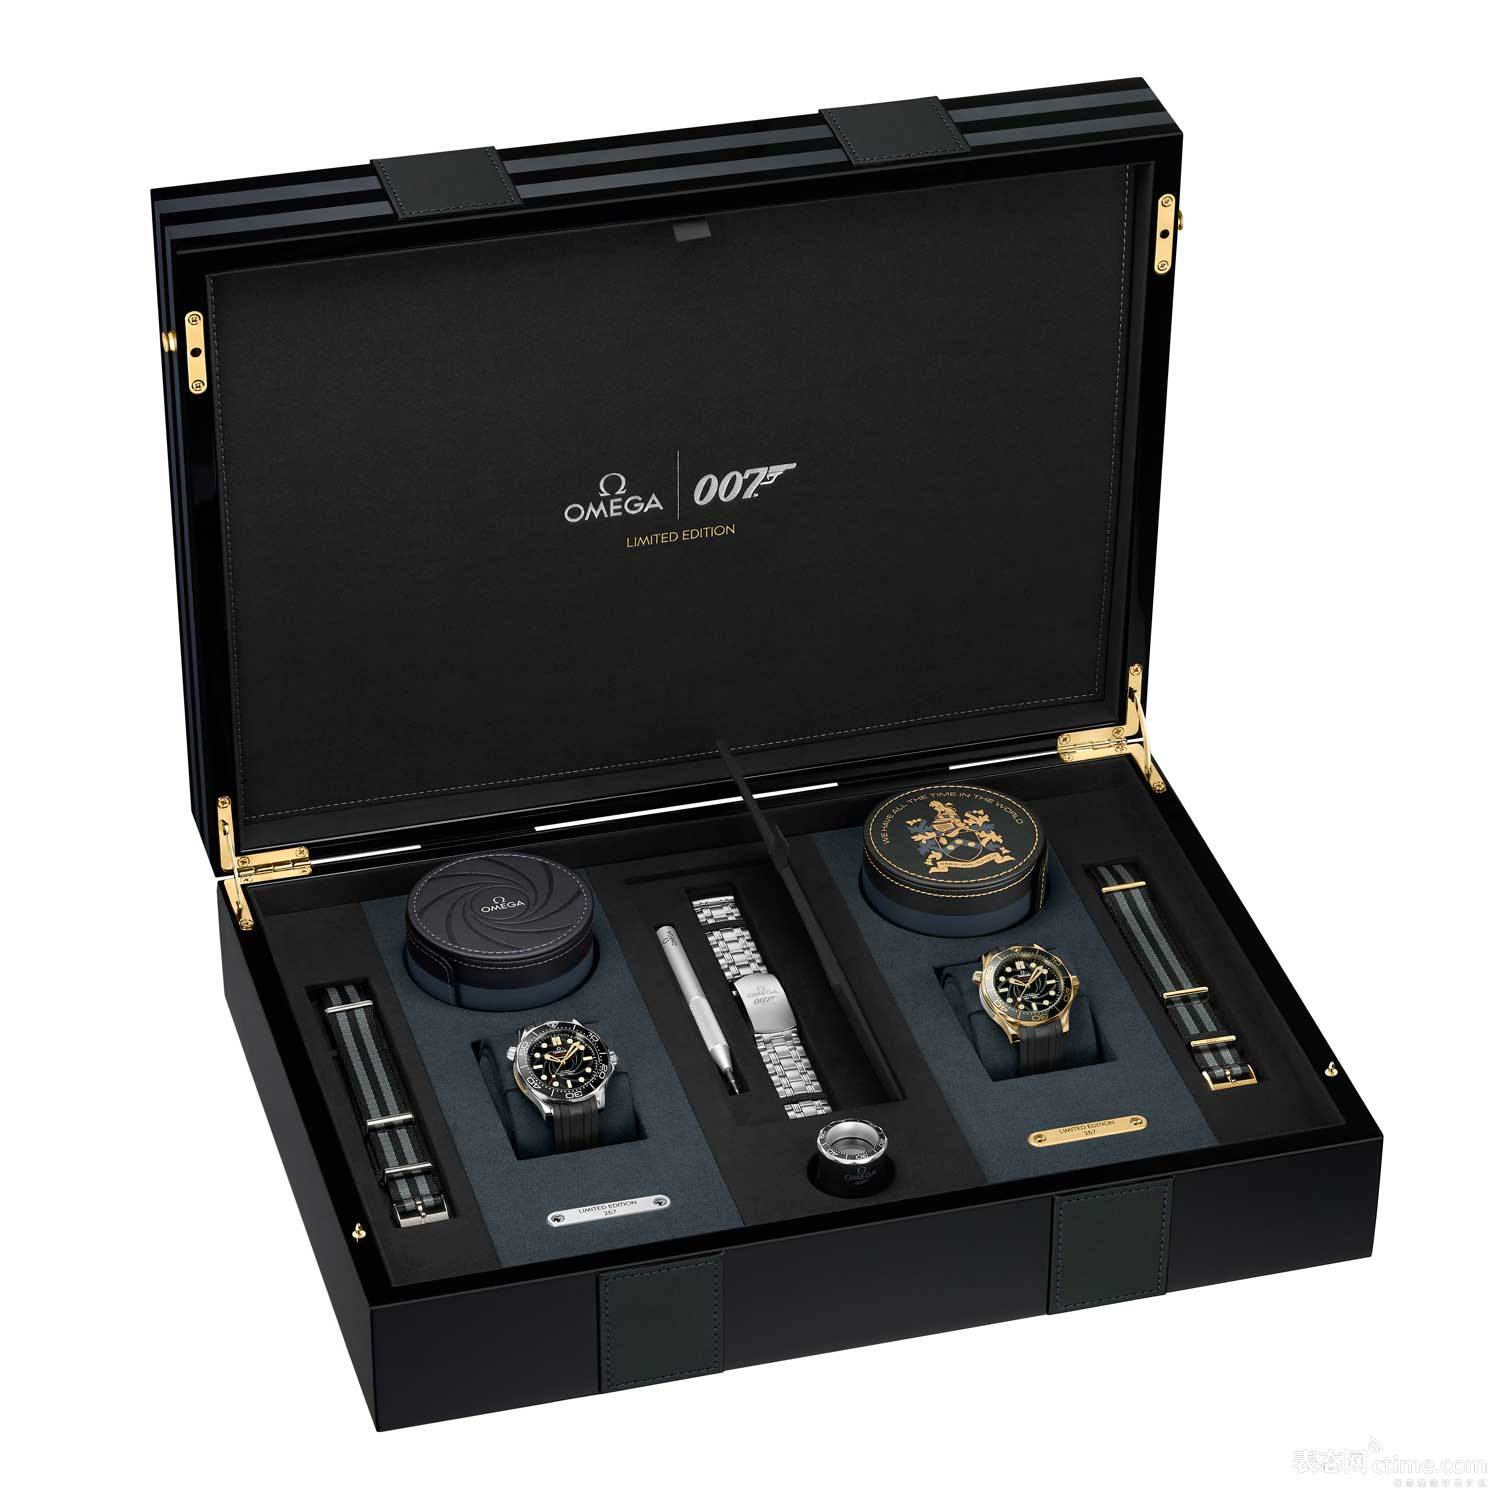 02-OMEGA-James-Bond-Limited-Edition-Set-Suitcase.jpg